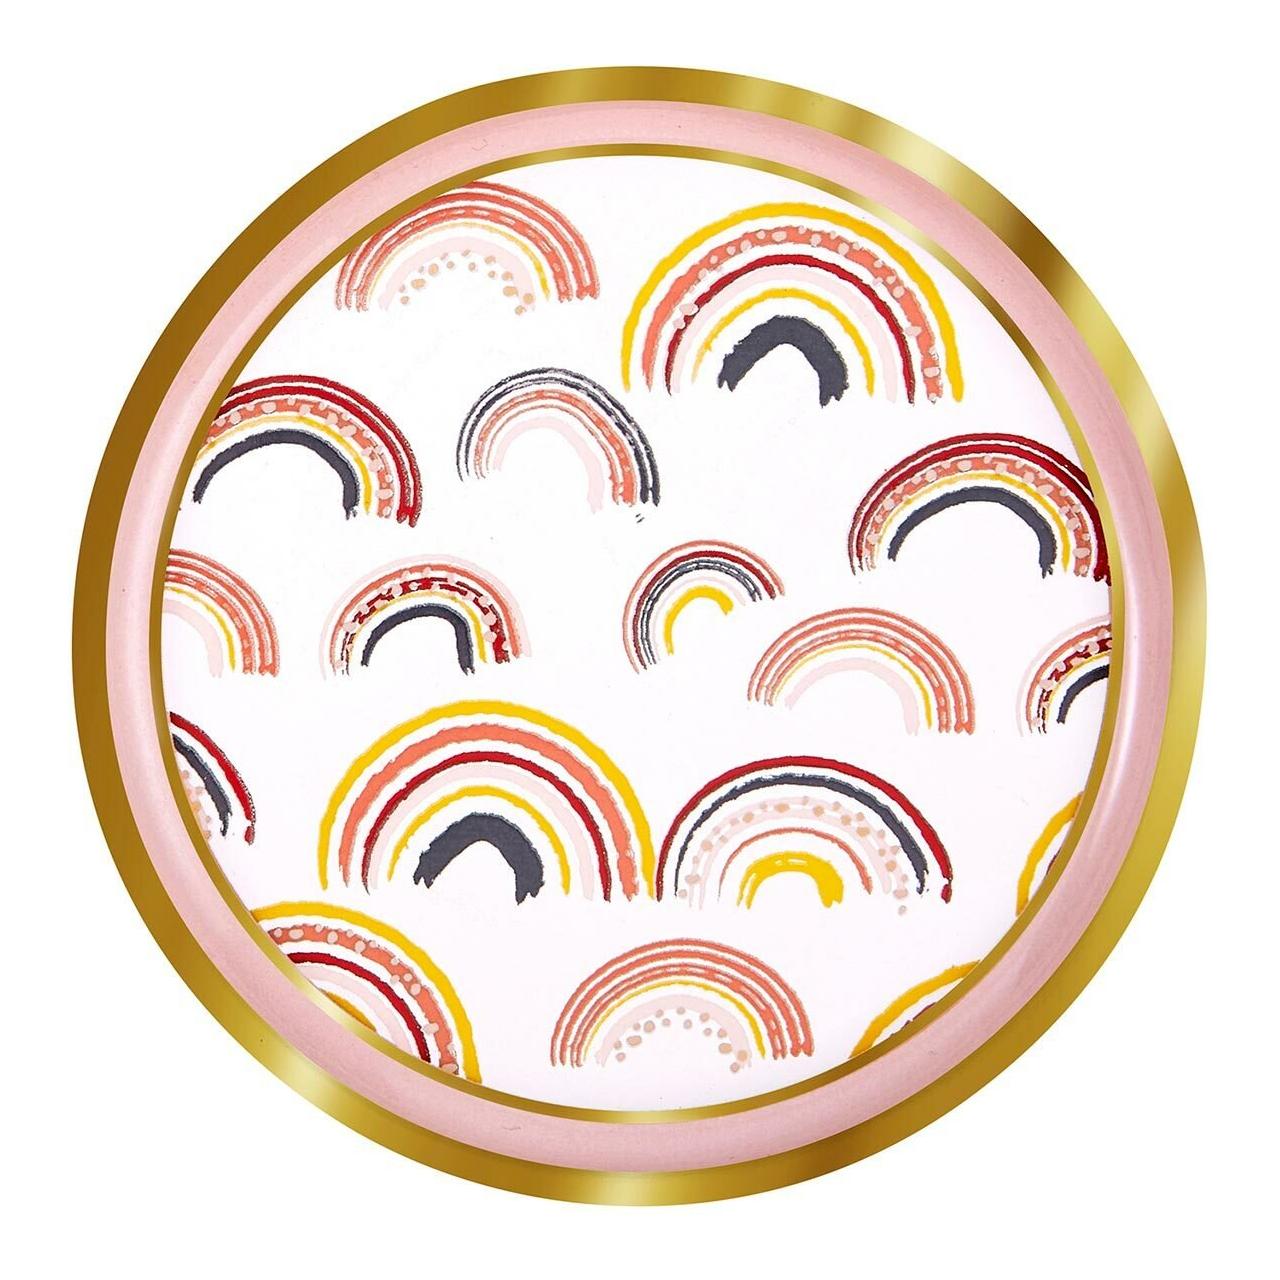 The Bullish Store - Love Yourself Mug & Coaster Lid with Rainbow Design